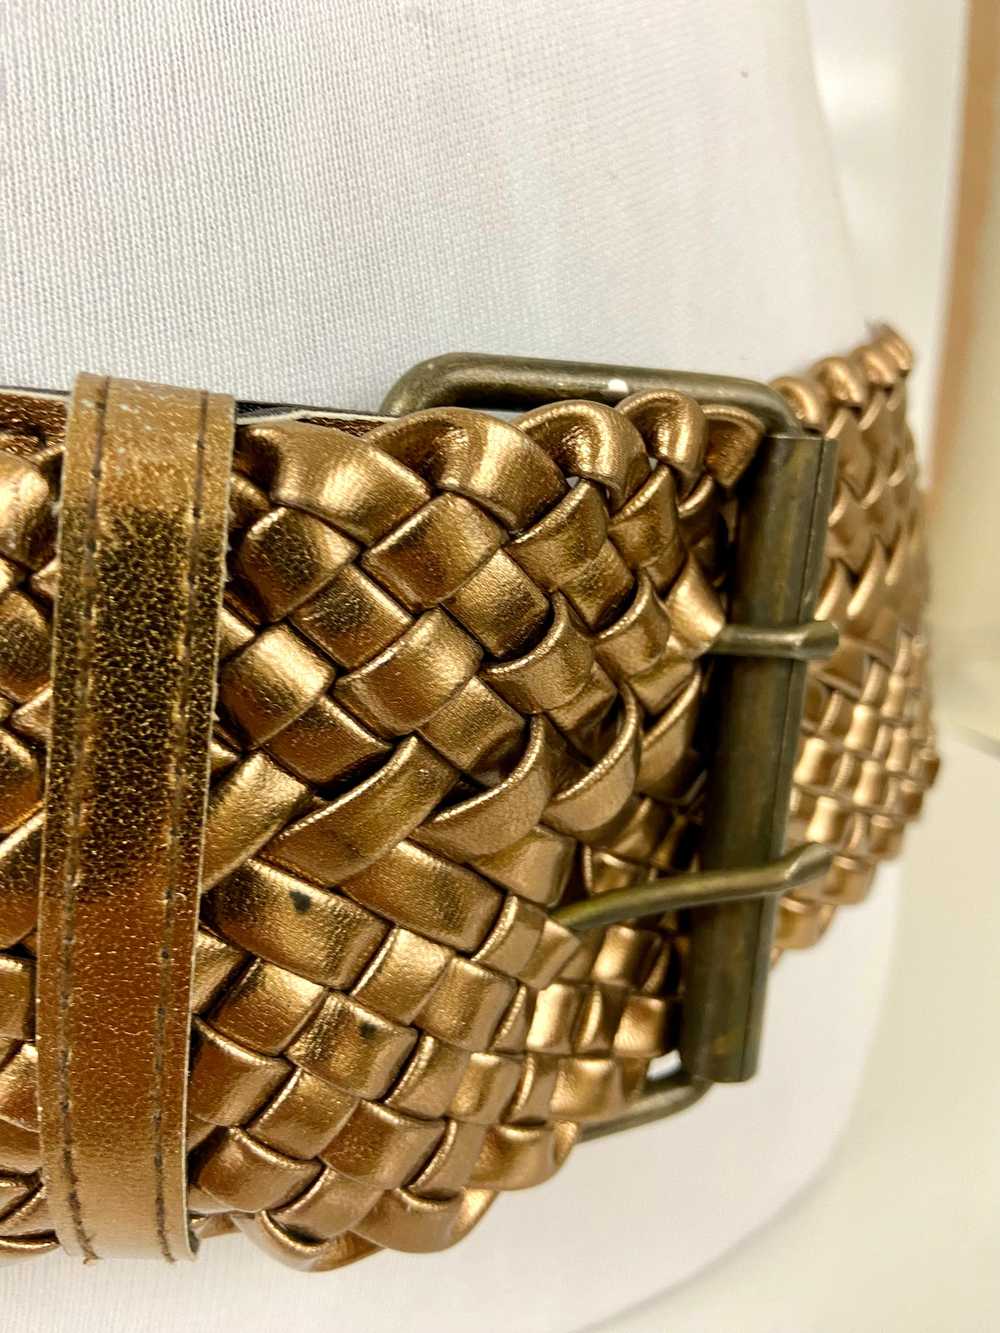 80's Vintage Woven Metallic Gold Braided
Belt - image 5